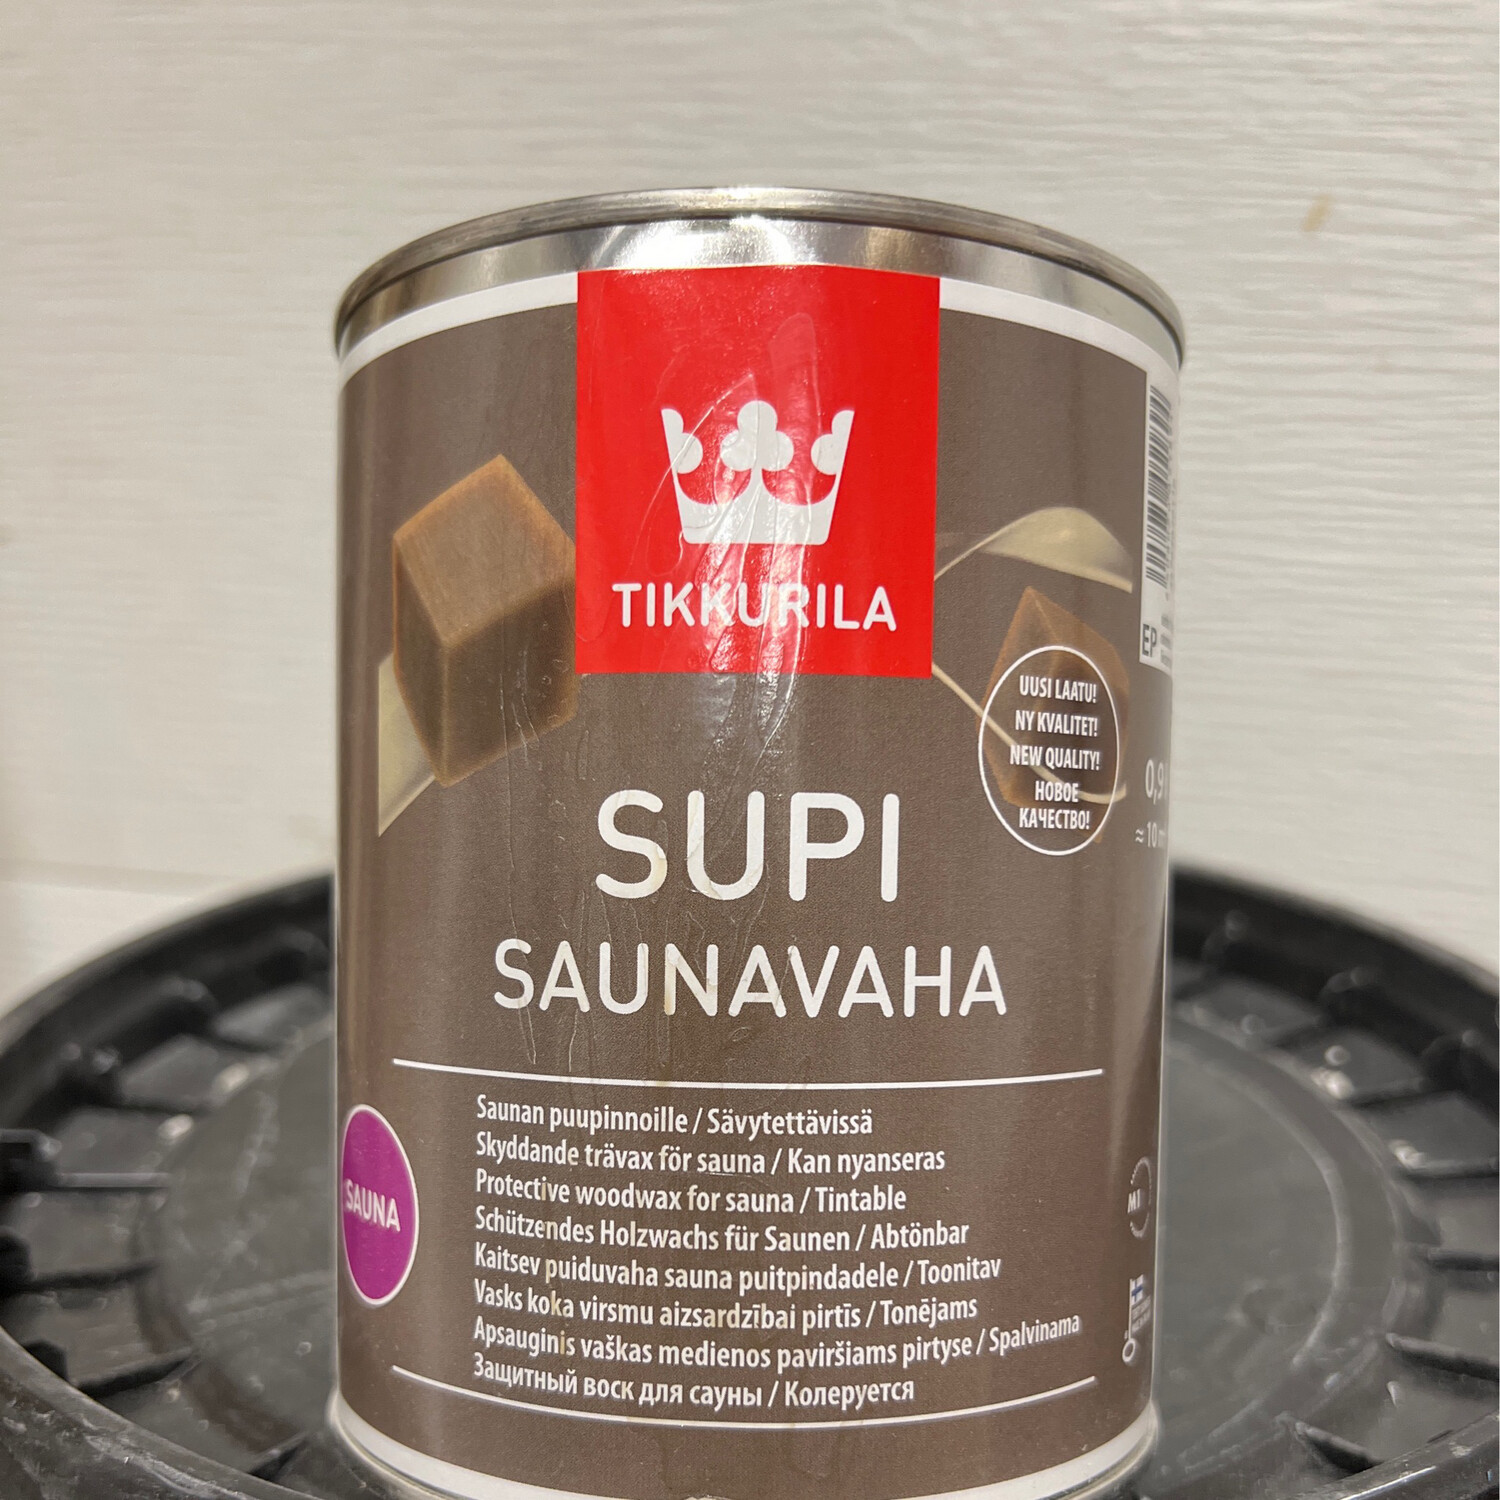 Supi Saunavaha Tikkurila Sauna Wax Sealer